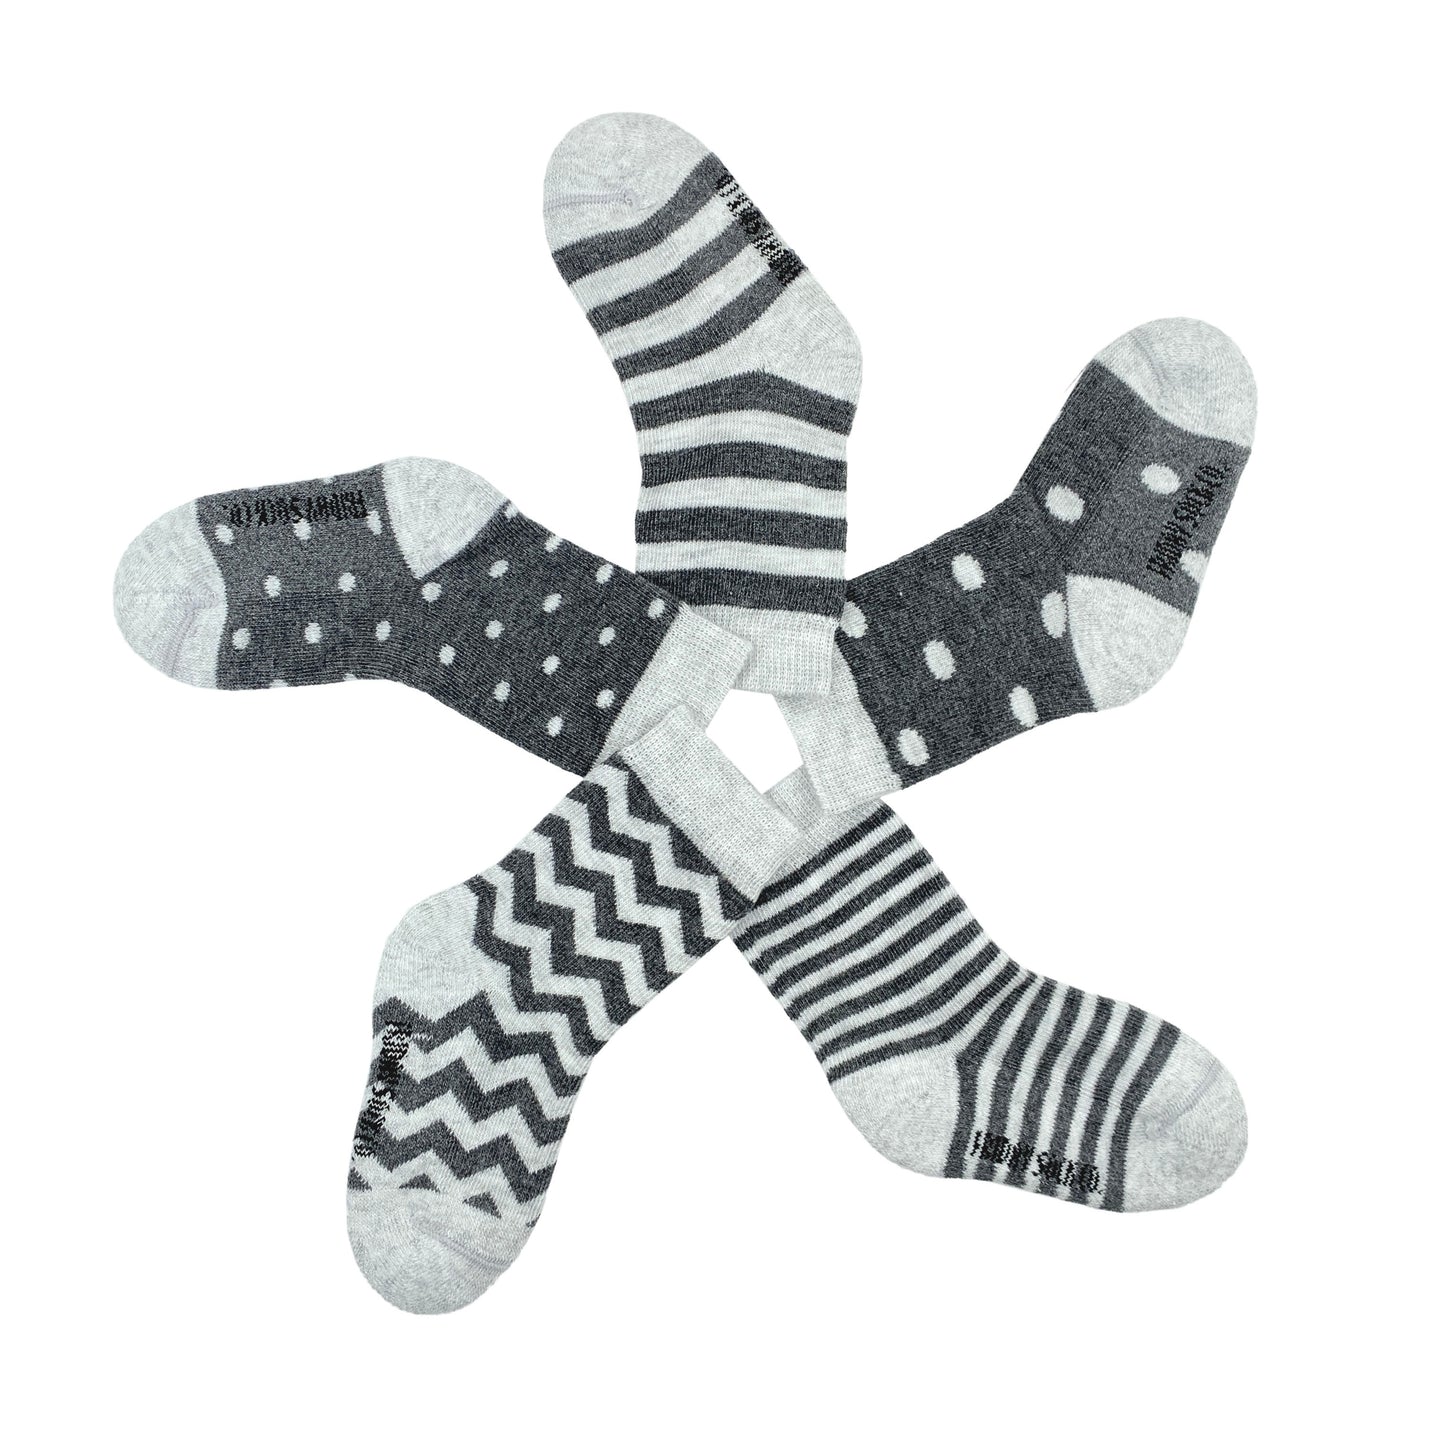 Mismatched Baby Sock Sets for Babies